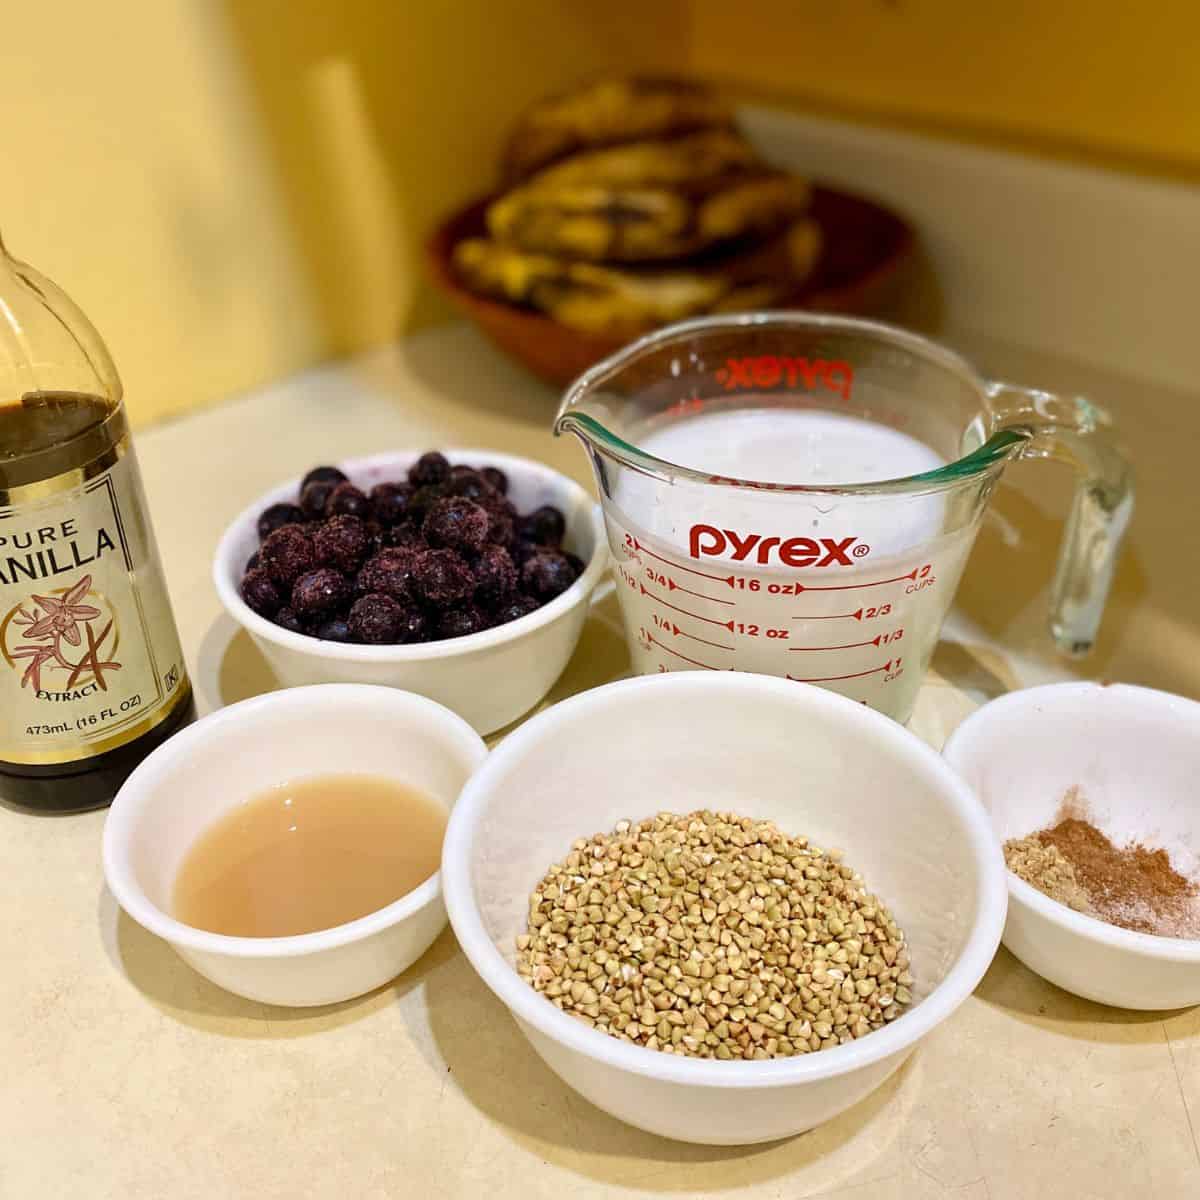 Buckwheat porridge and blueberry compote ingredients of buckwheat groats, almond milk, spices, blueberries, lemon juice, stevia, and vanilla.